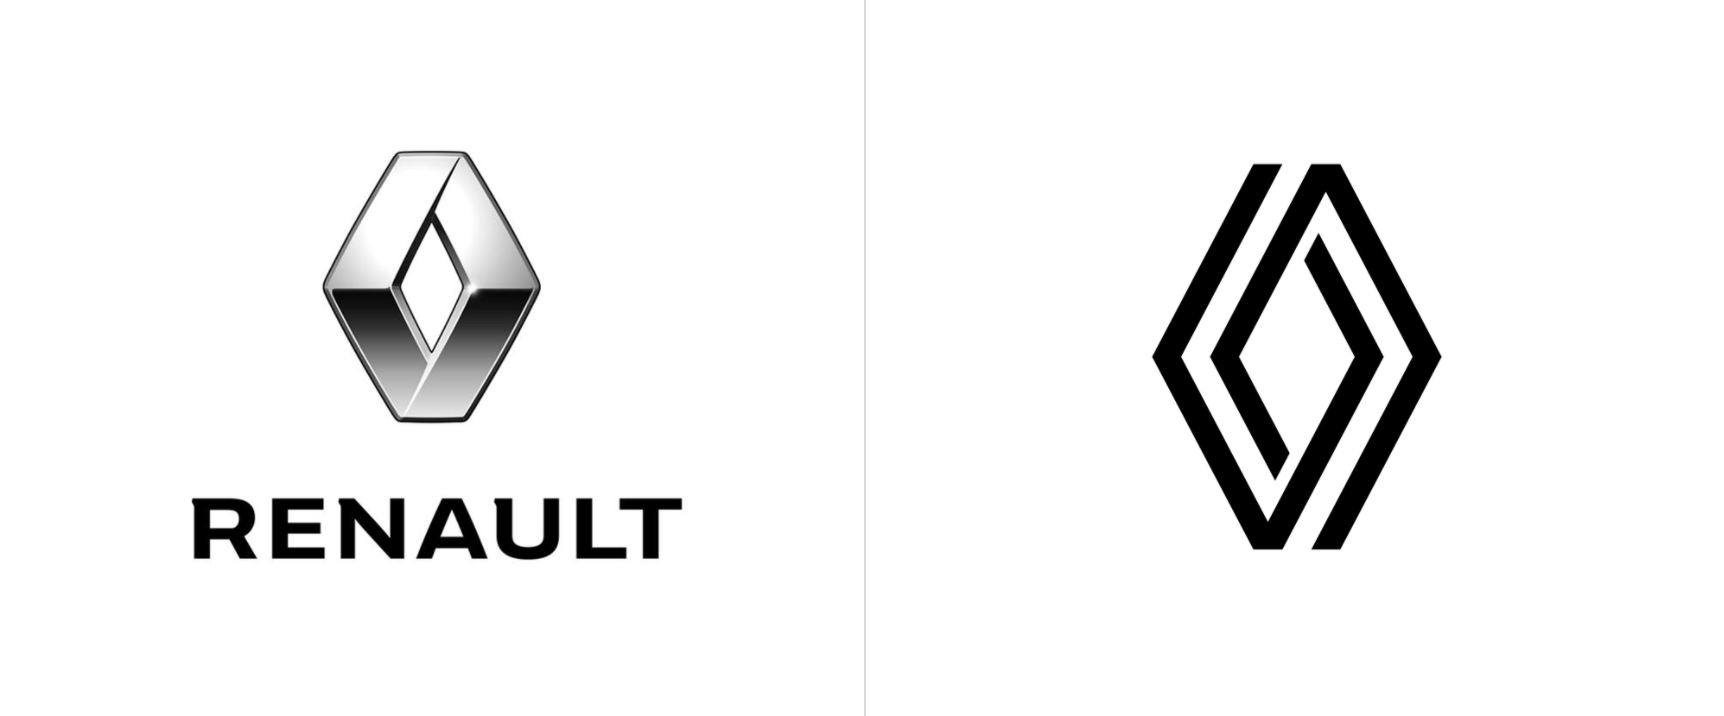 Auto brand trends: Renault logo